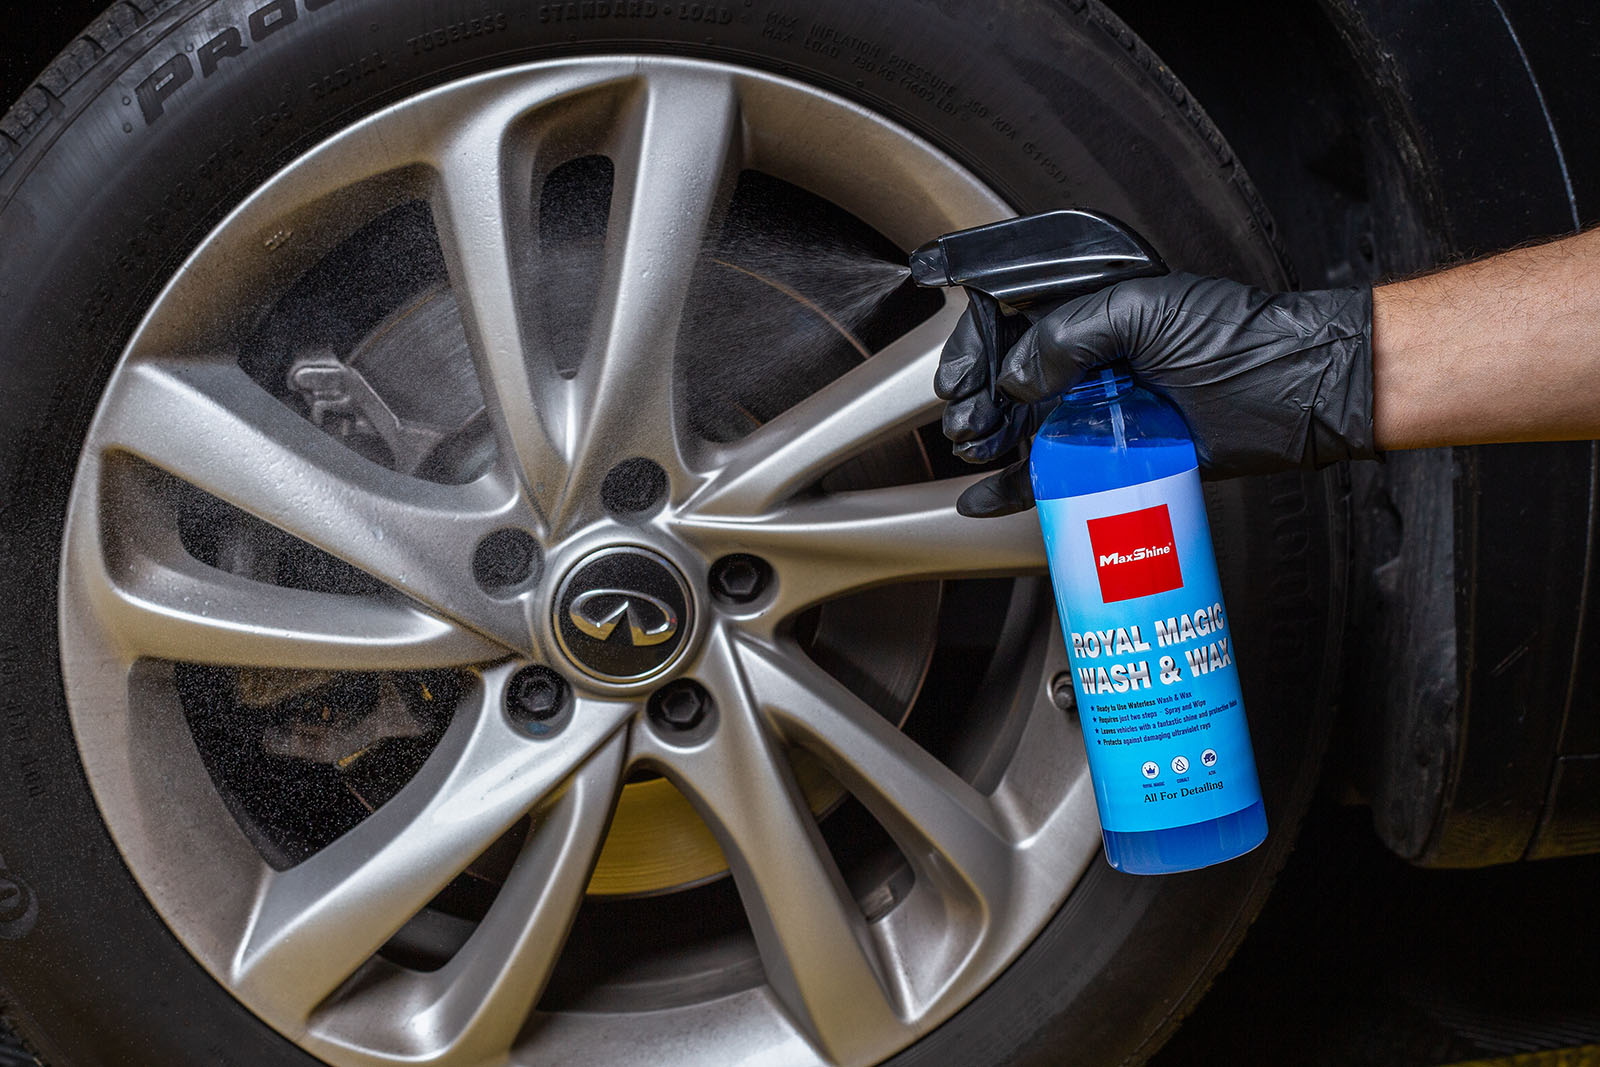 waterless car wash spray - Maxshine waterless wash